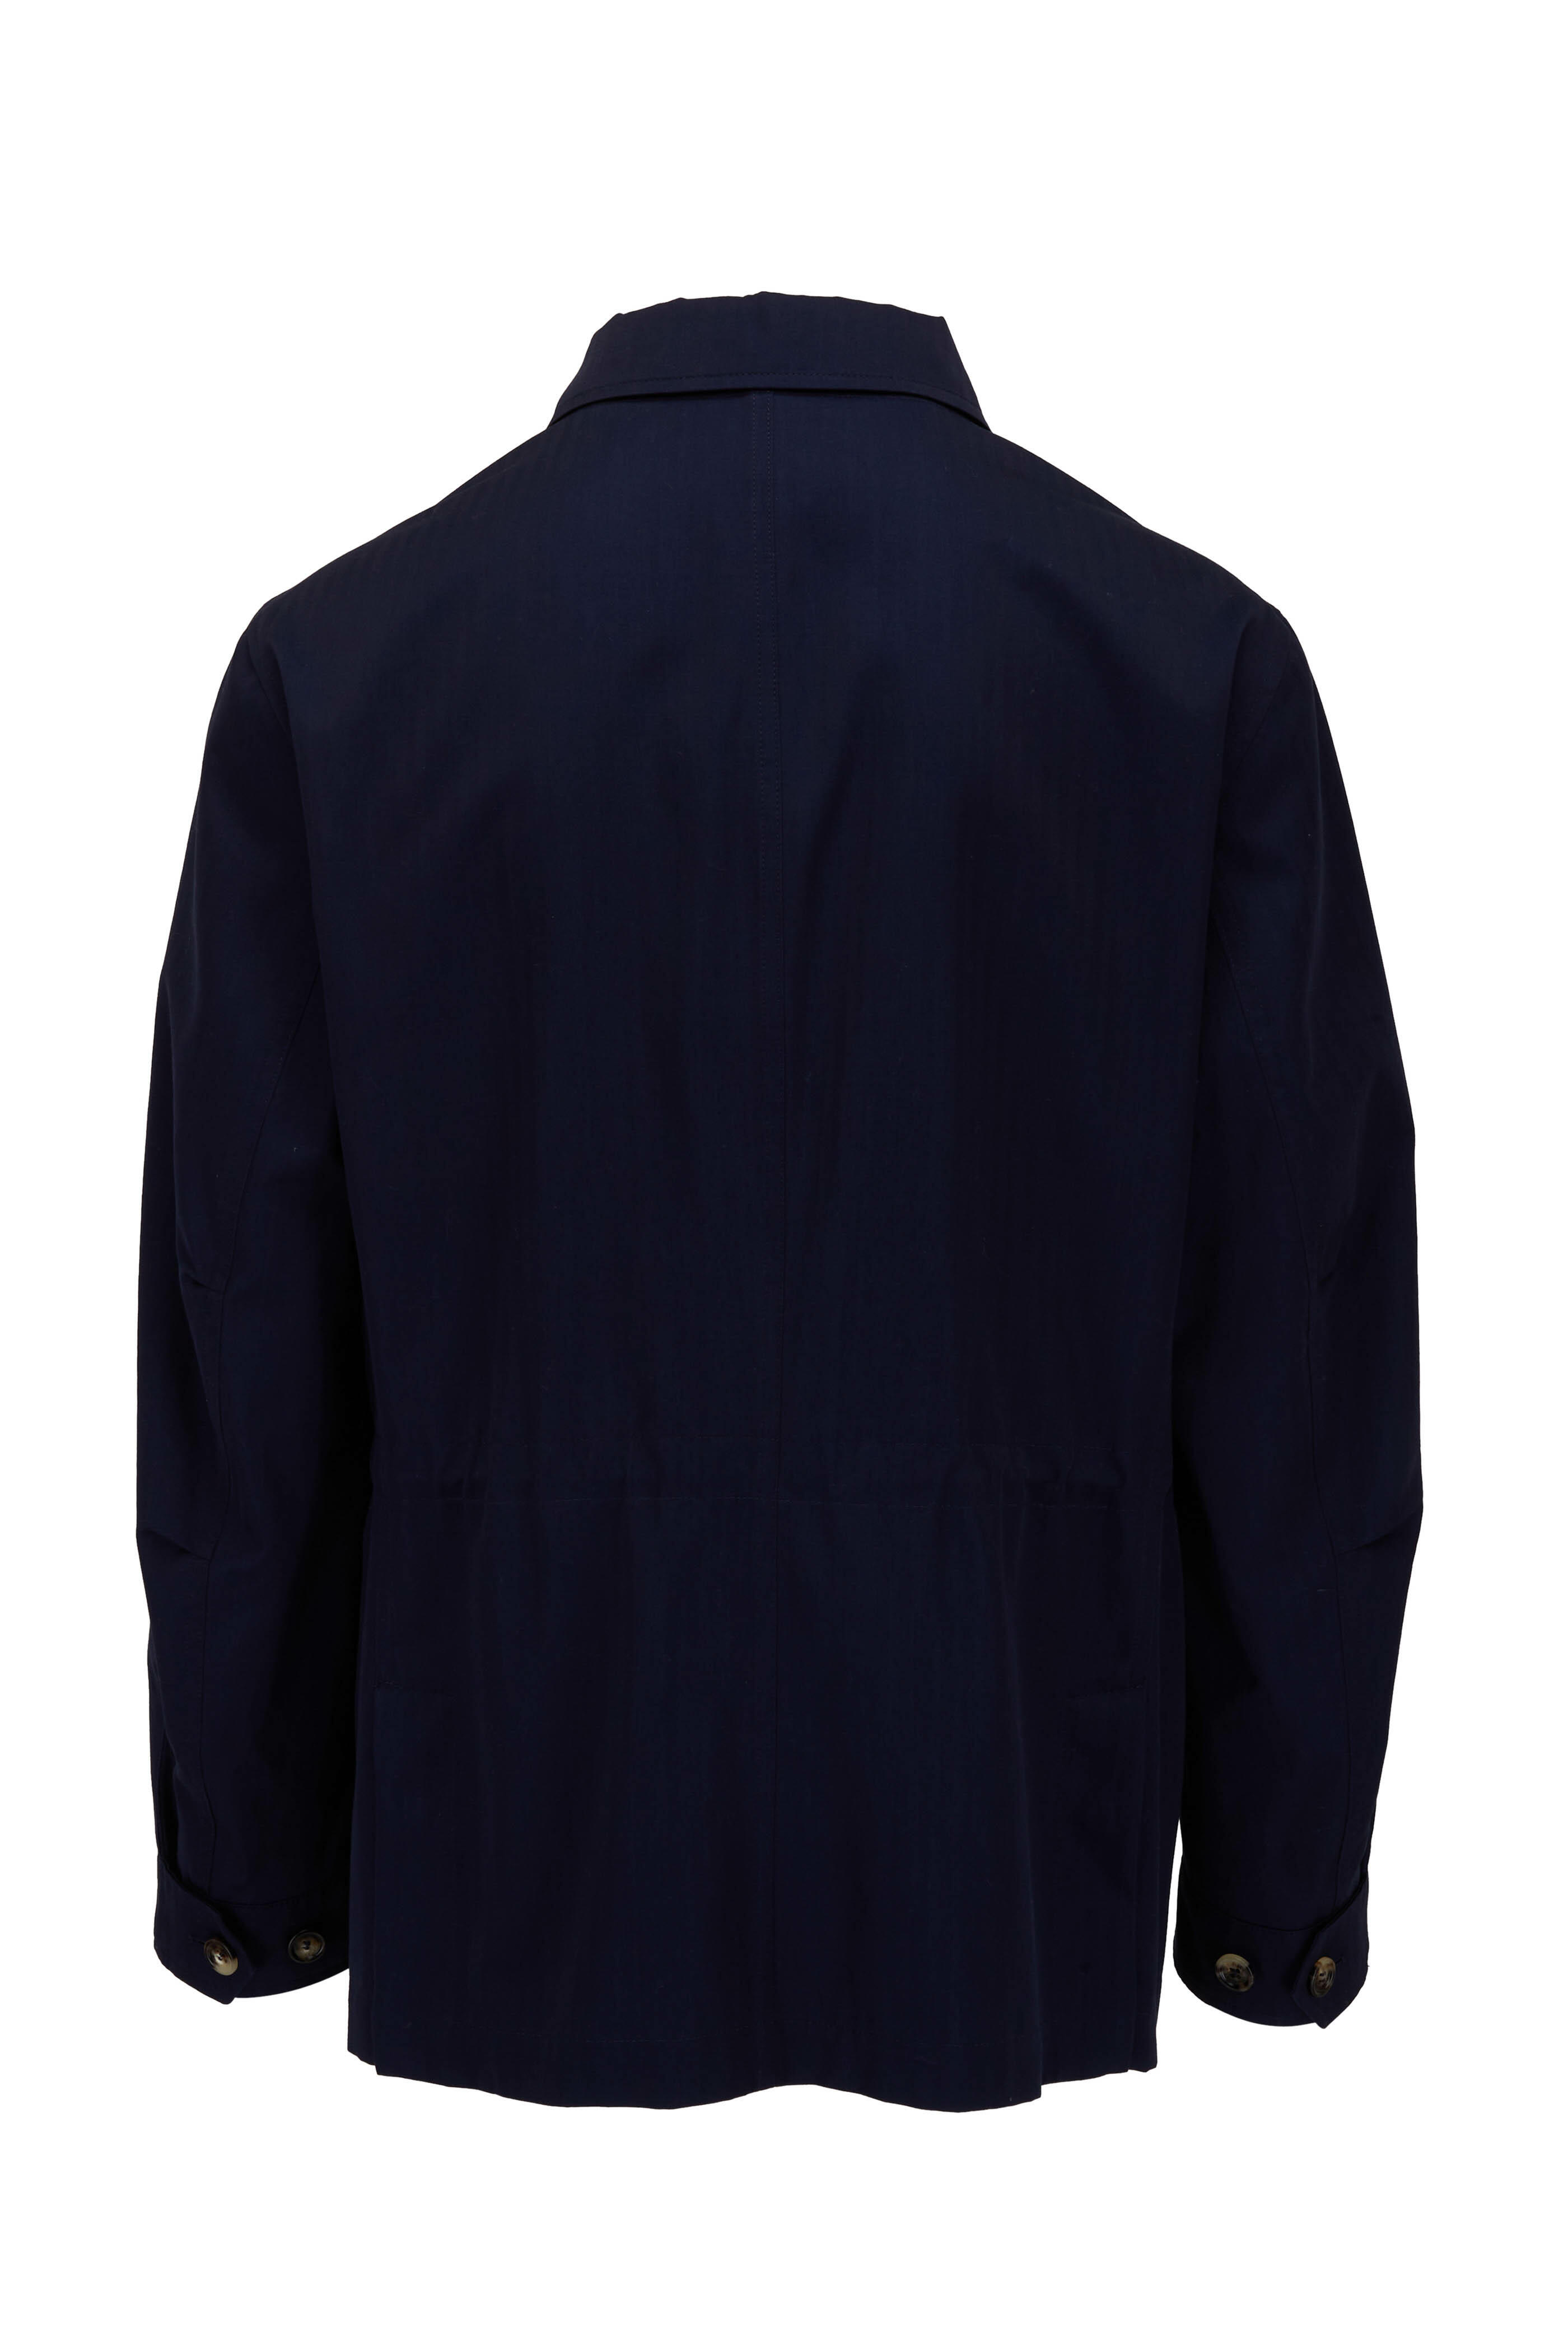 Brunello Cucinelli - Navy Tonal Stripe Cotton Safari Jacket